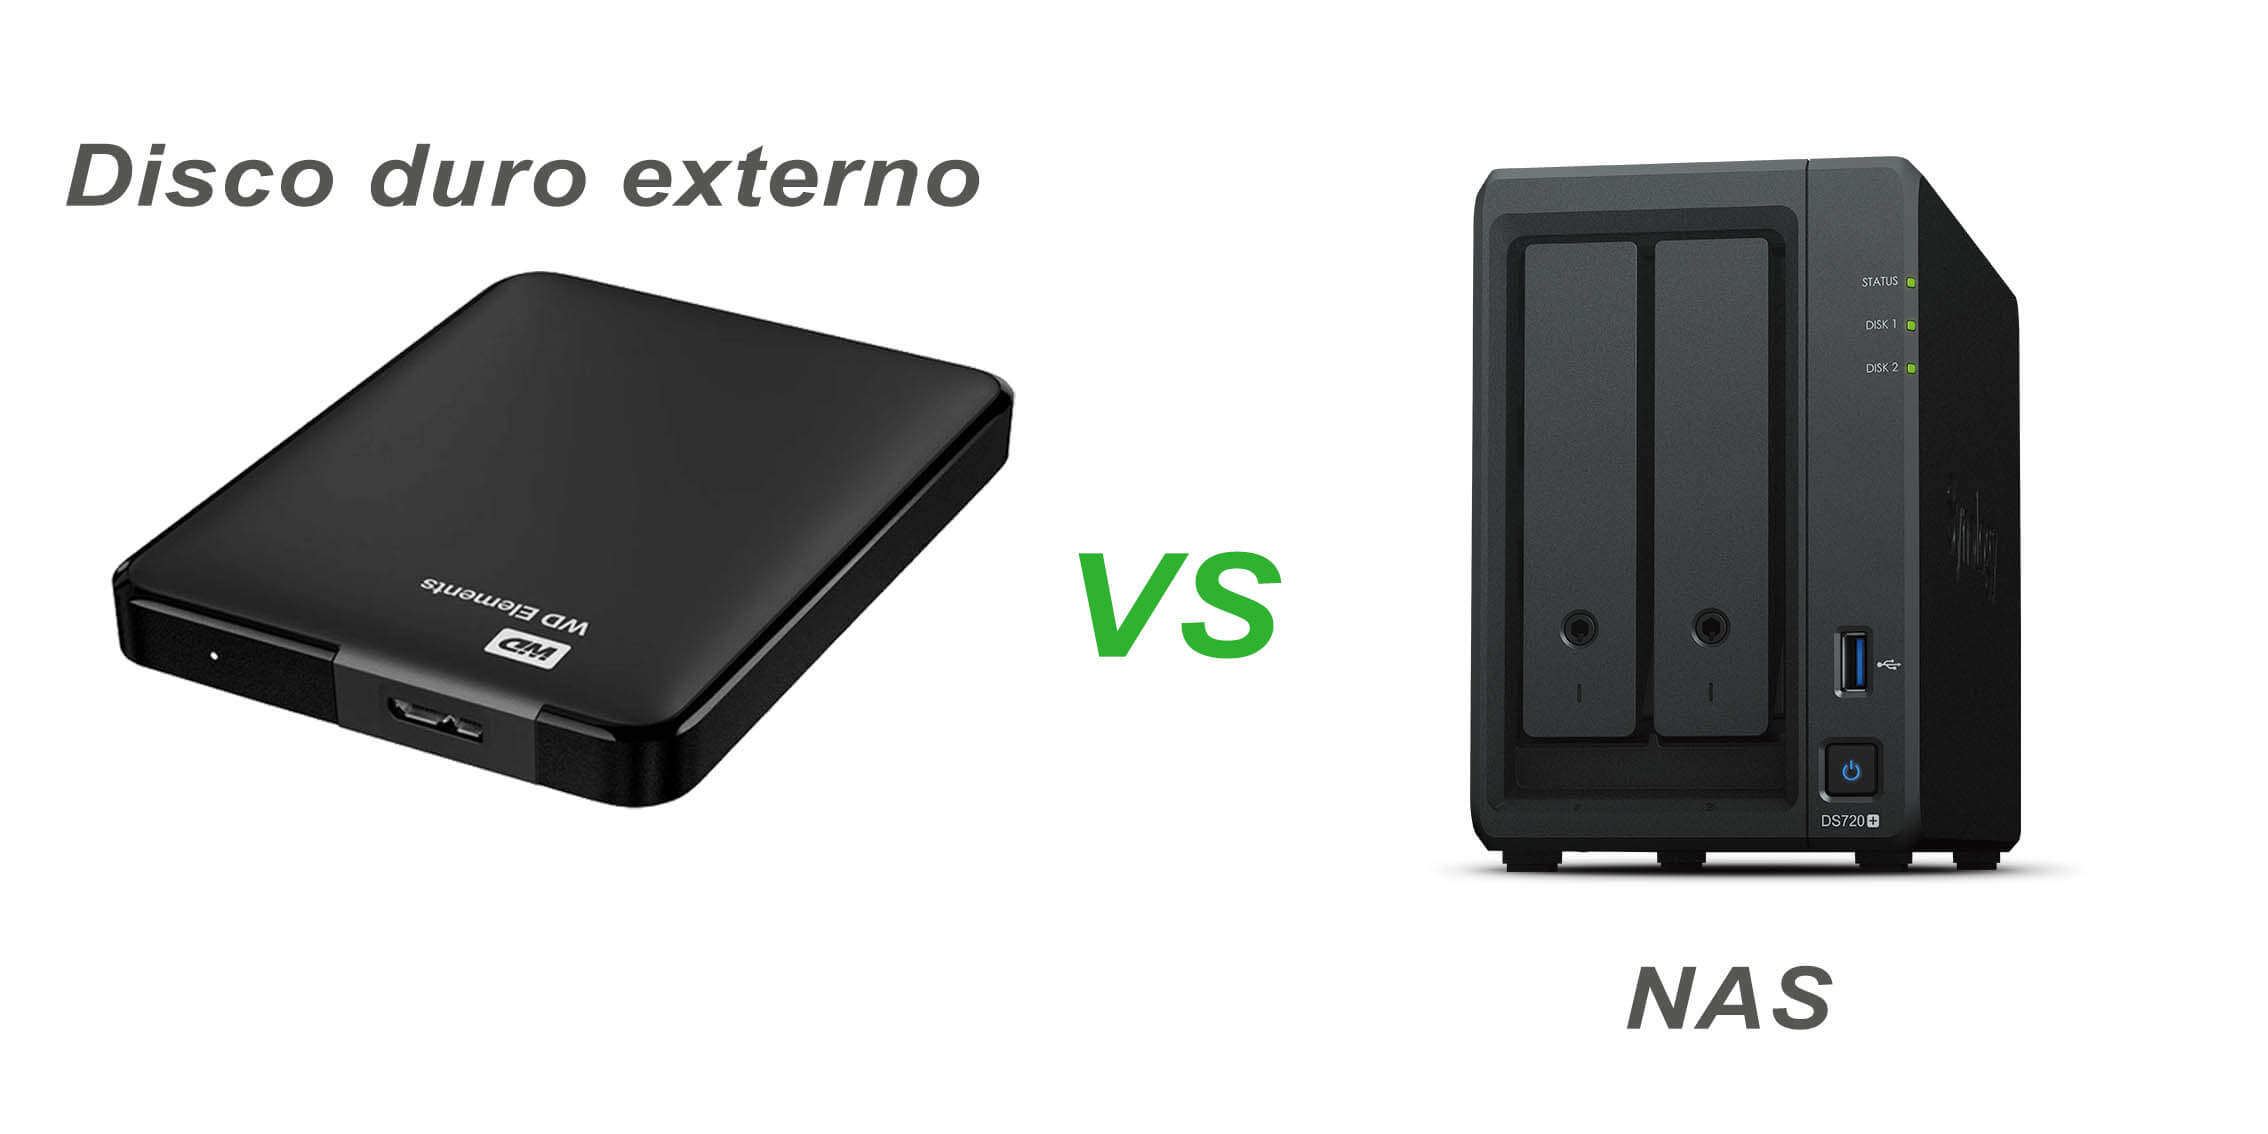 Deshacer pluma Residente NAS o disco duro externo, Qué opción es mejor elegir? | Inforpen